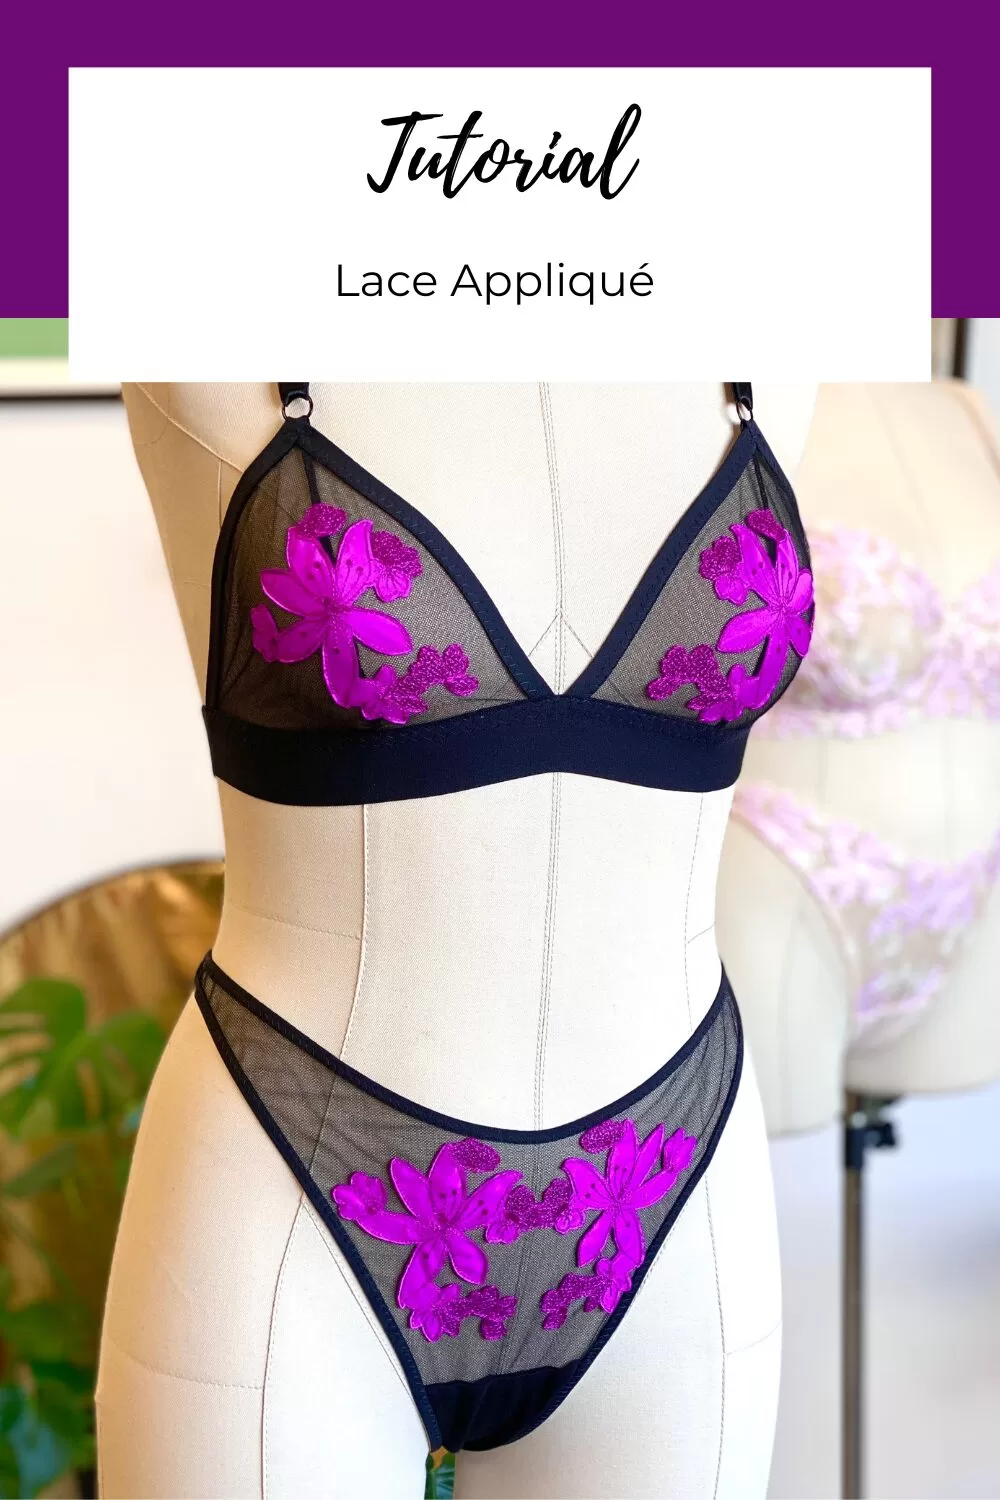 Lace Appliqué Tutorial | Make the Most of Your Scraps